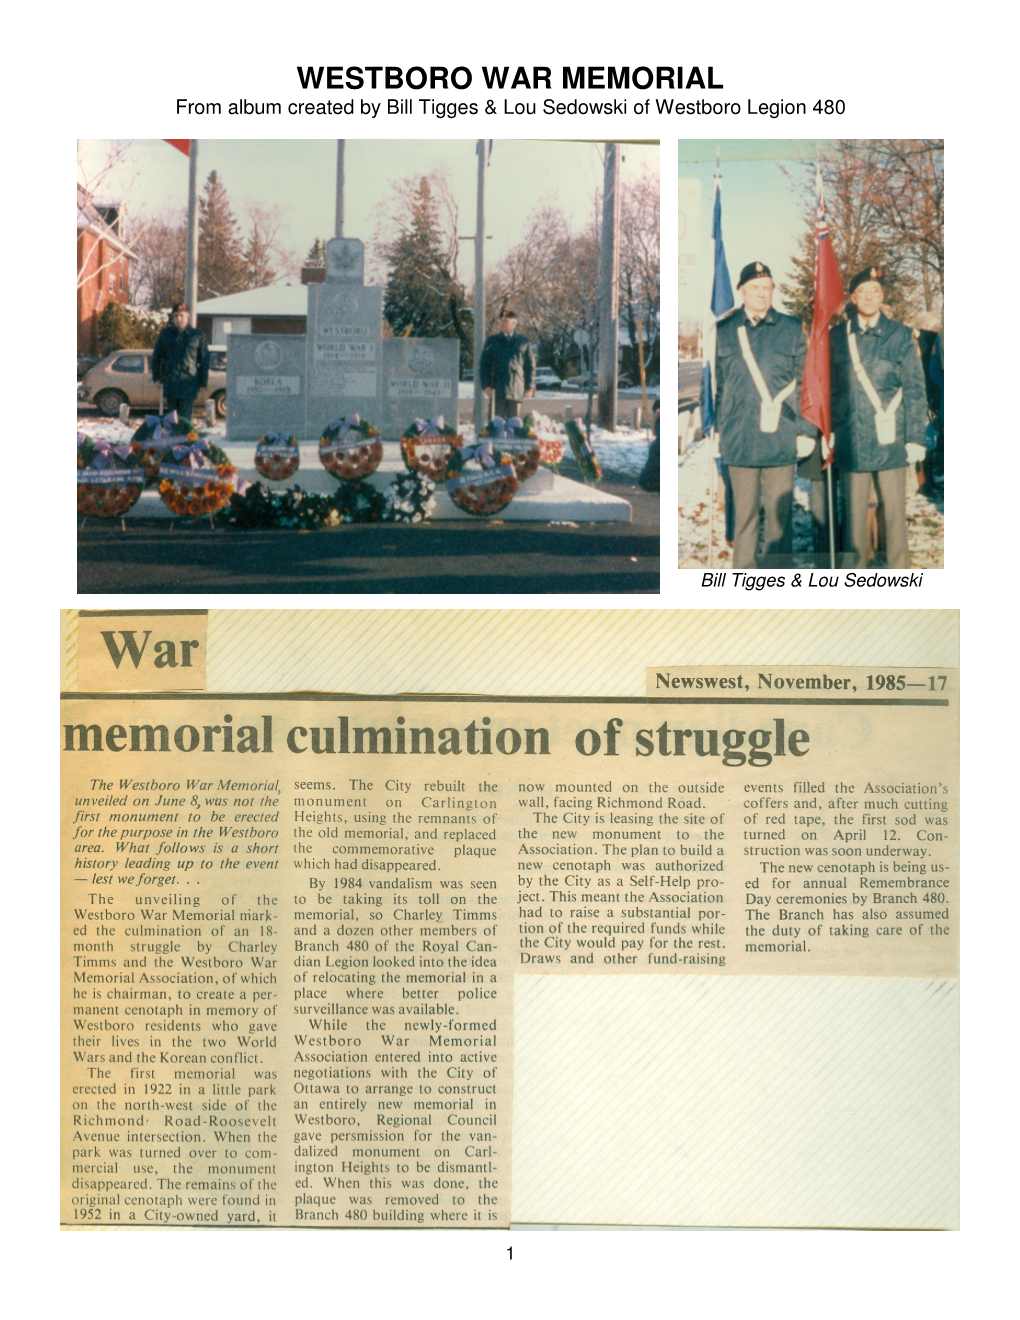 WESTBORO WAR MEMORIAL from Album Created by Bill Tigges & Lou Sedowski of Westboro Legion 480